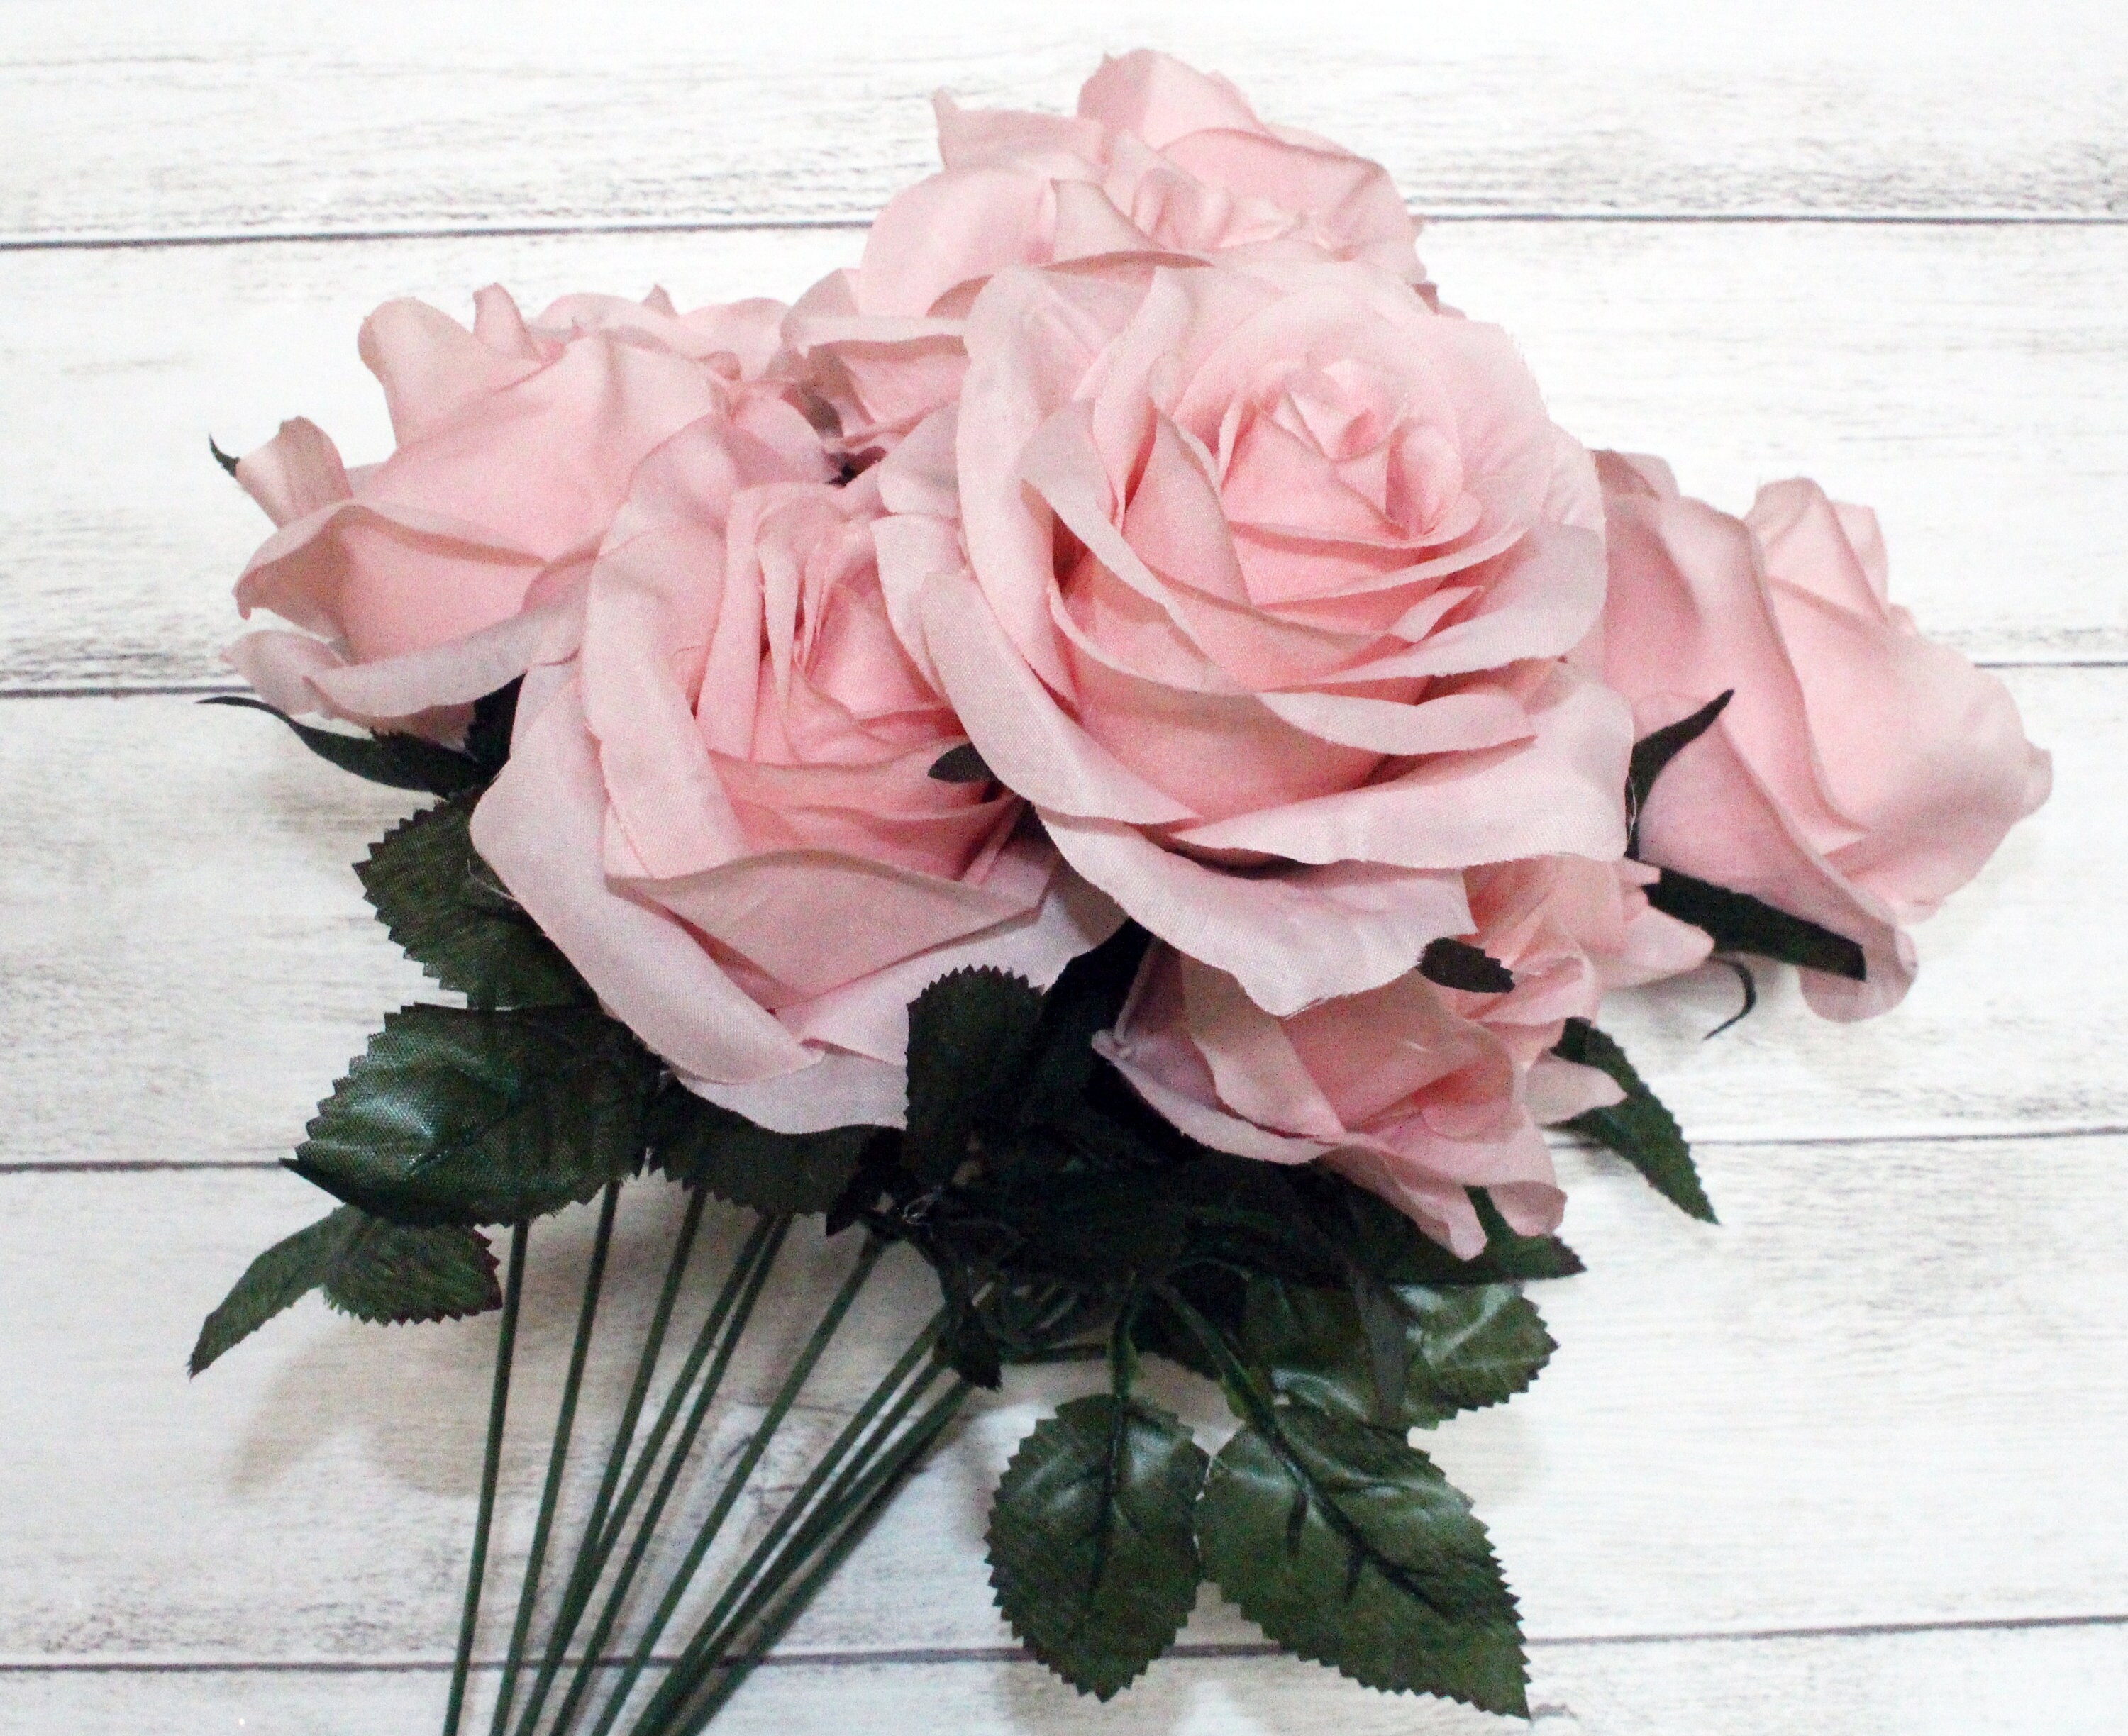 1 Bunch 9 Heads Artifical Silk Rose Flower Bouquet Room Wedding Party Home Decor 